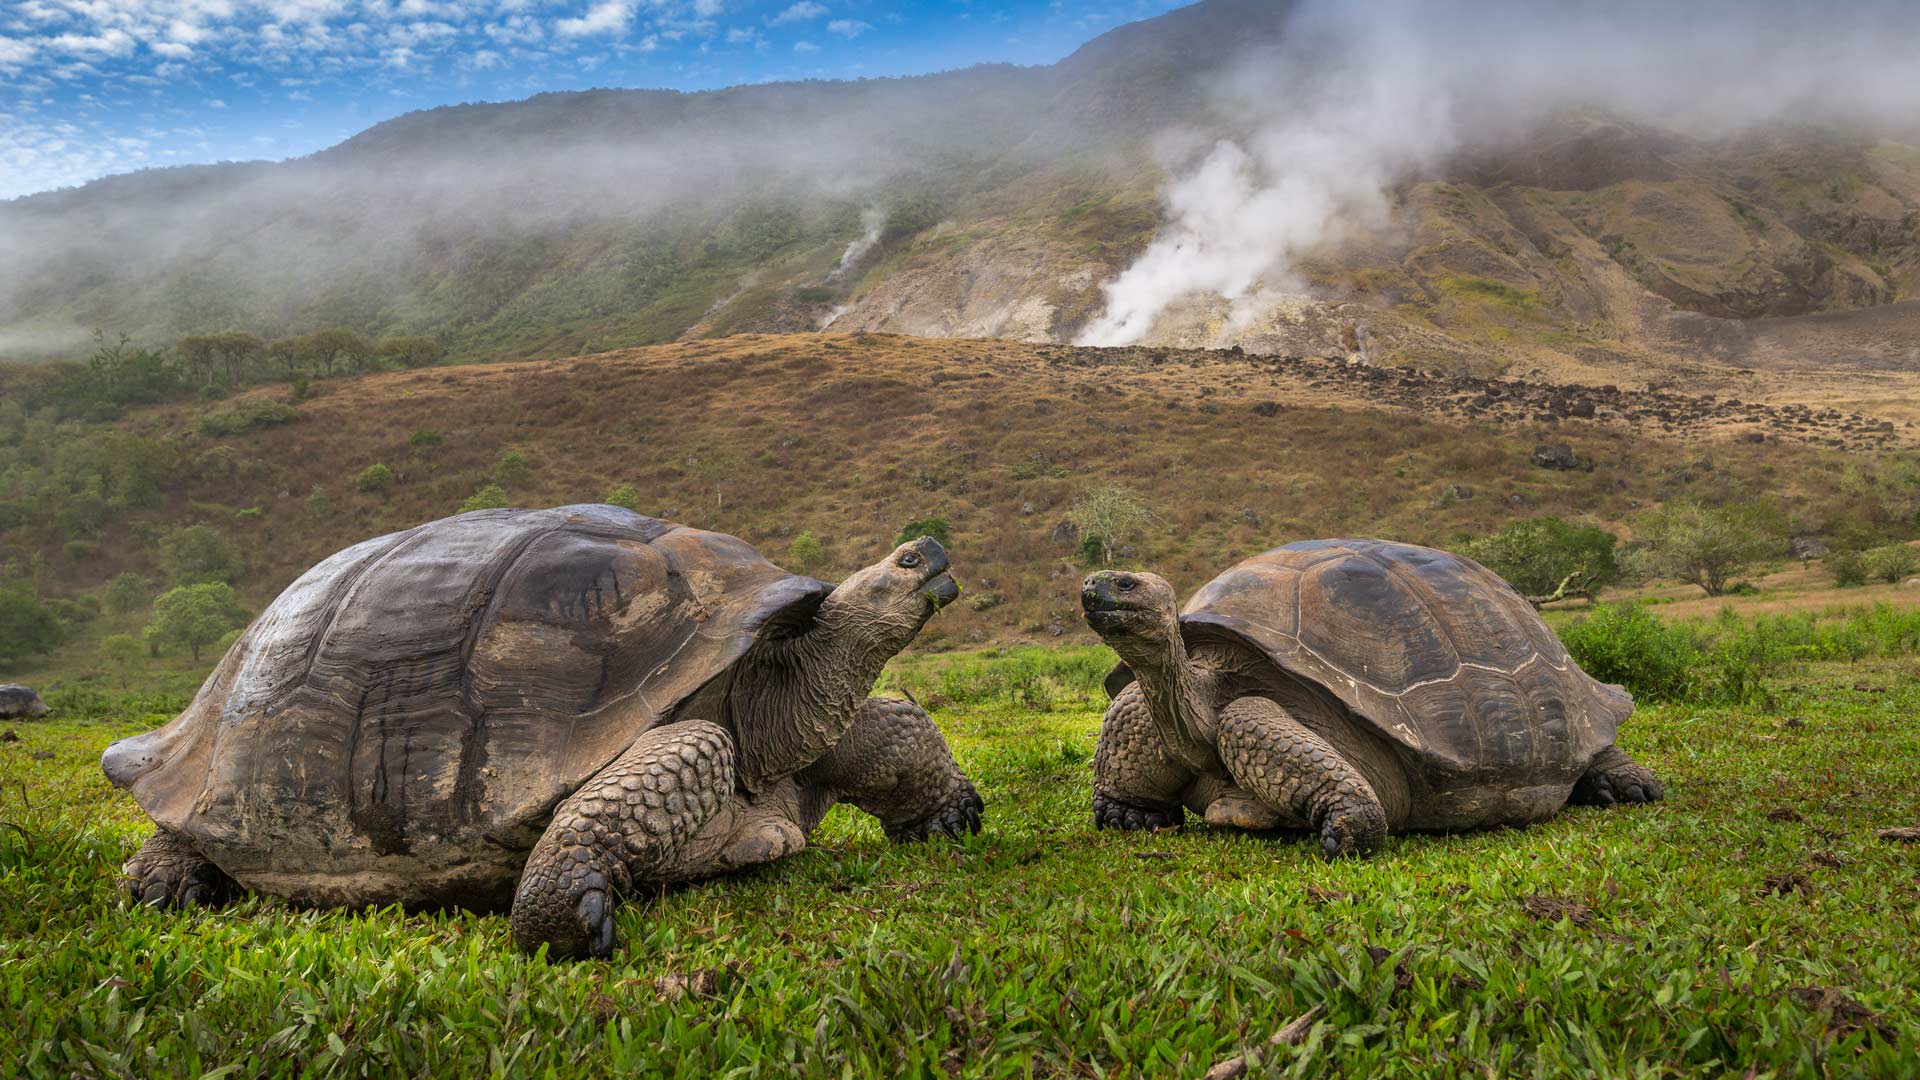 Volcán Alcedo giant tortoises